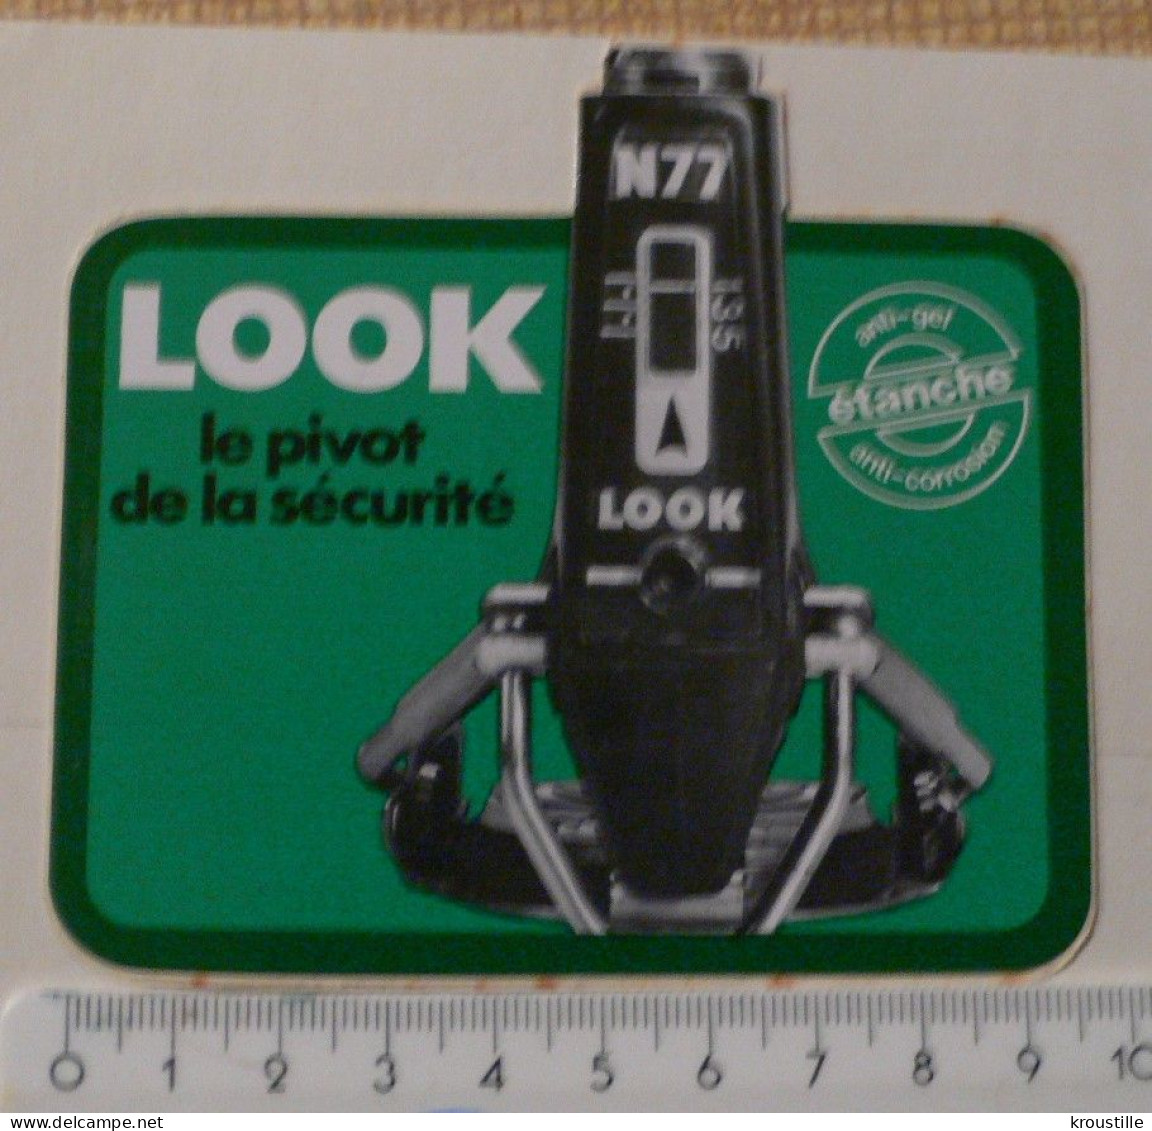 AUTOCOLLANT LOOK - LE PIVOT DE LA SECURITE - Stickers